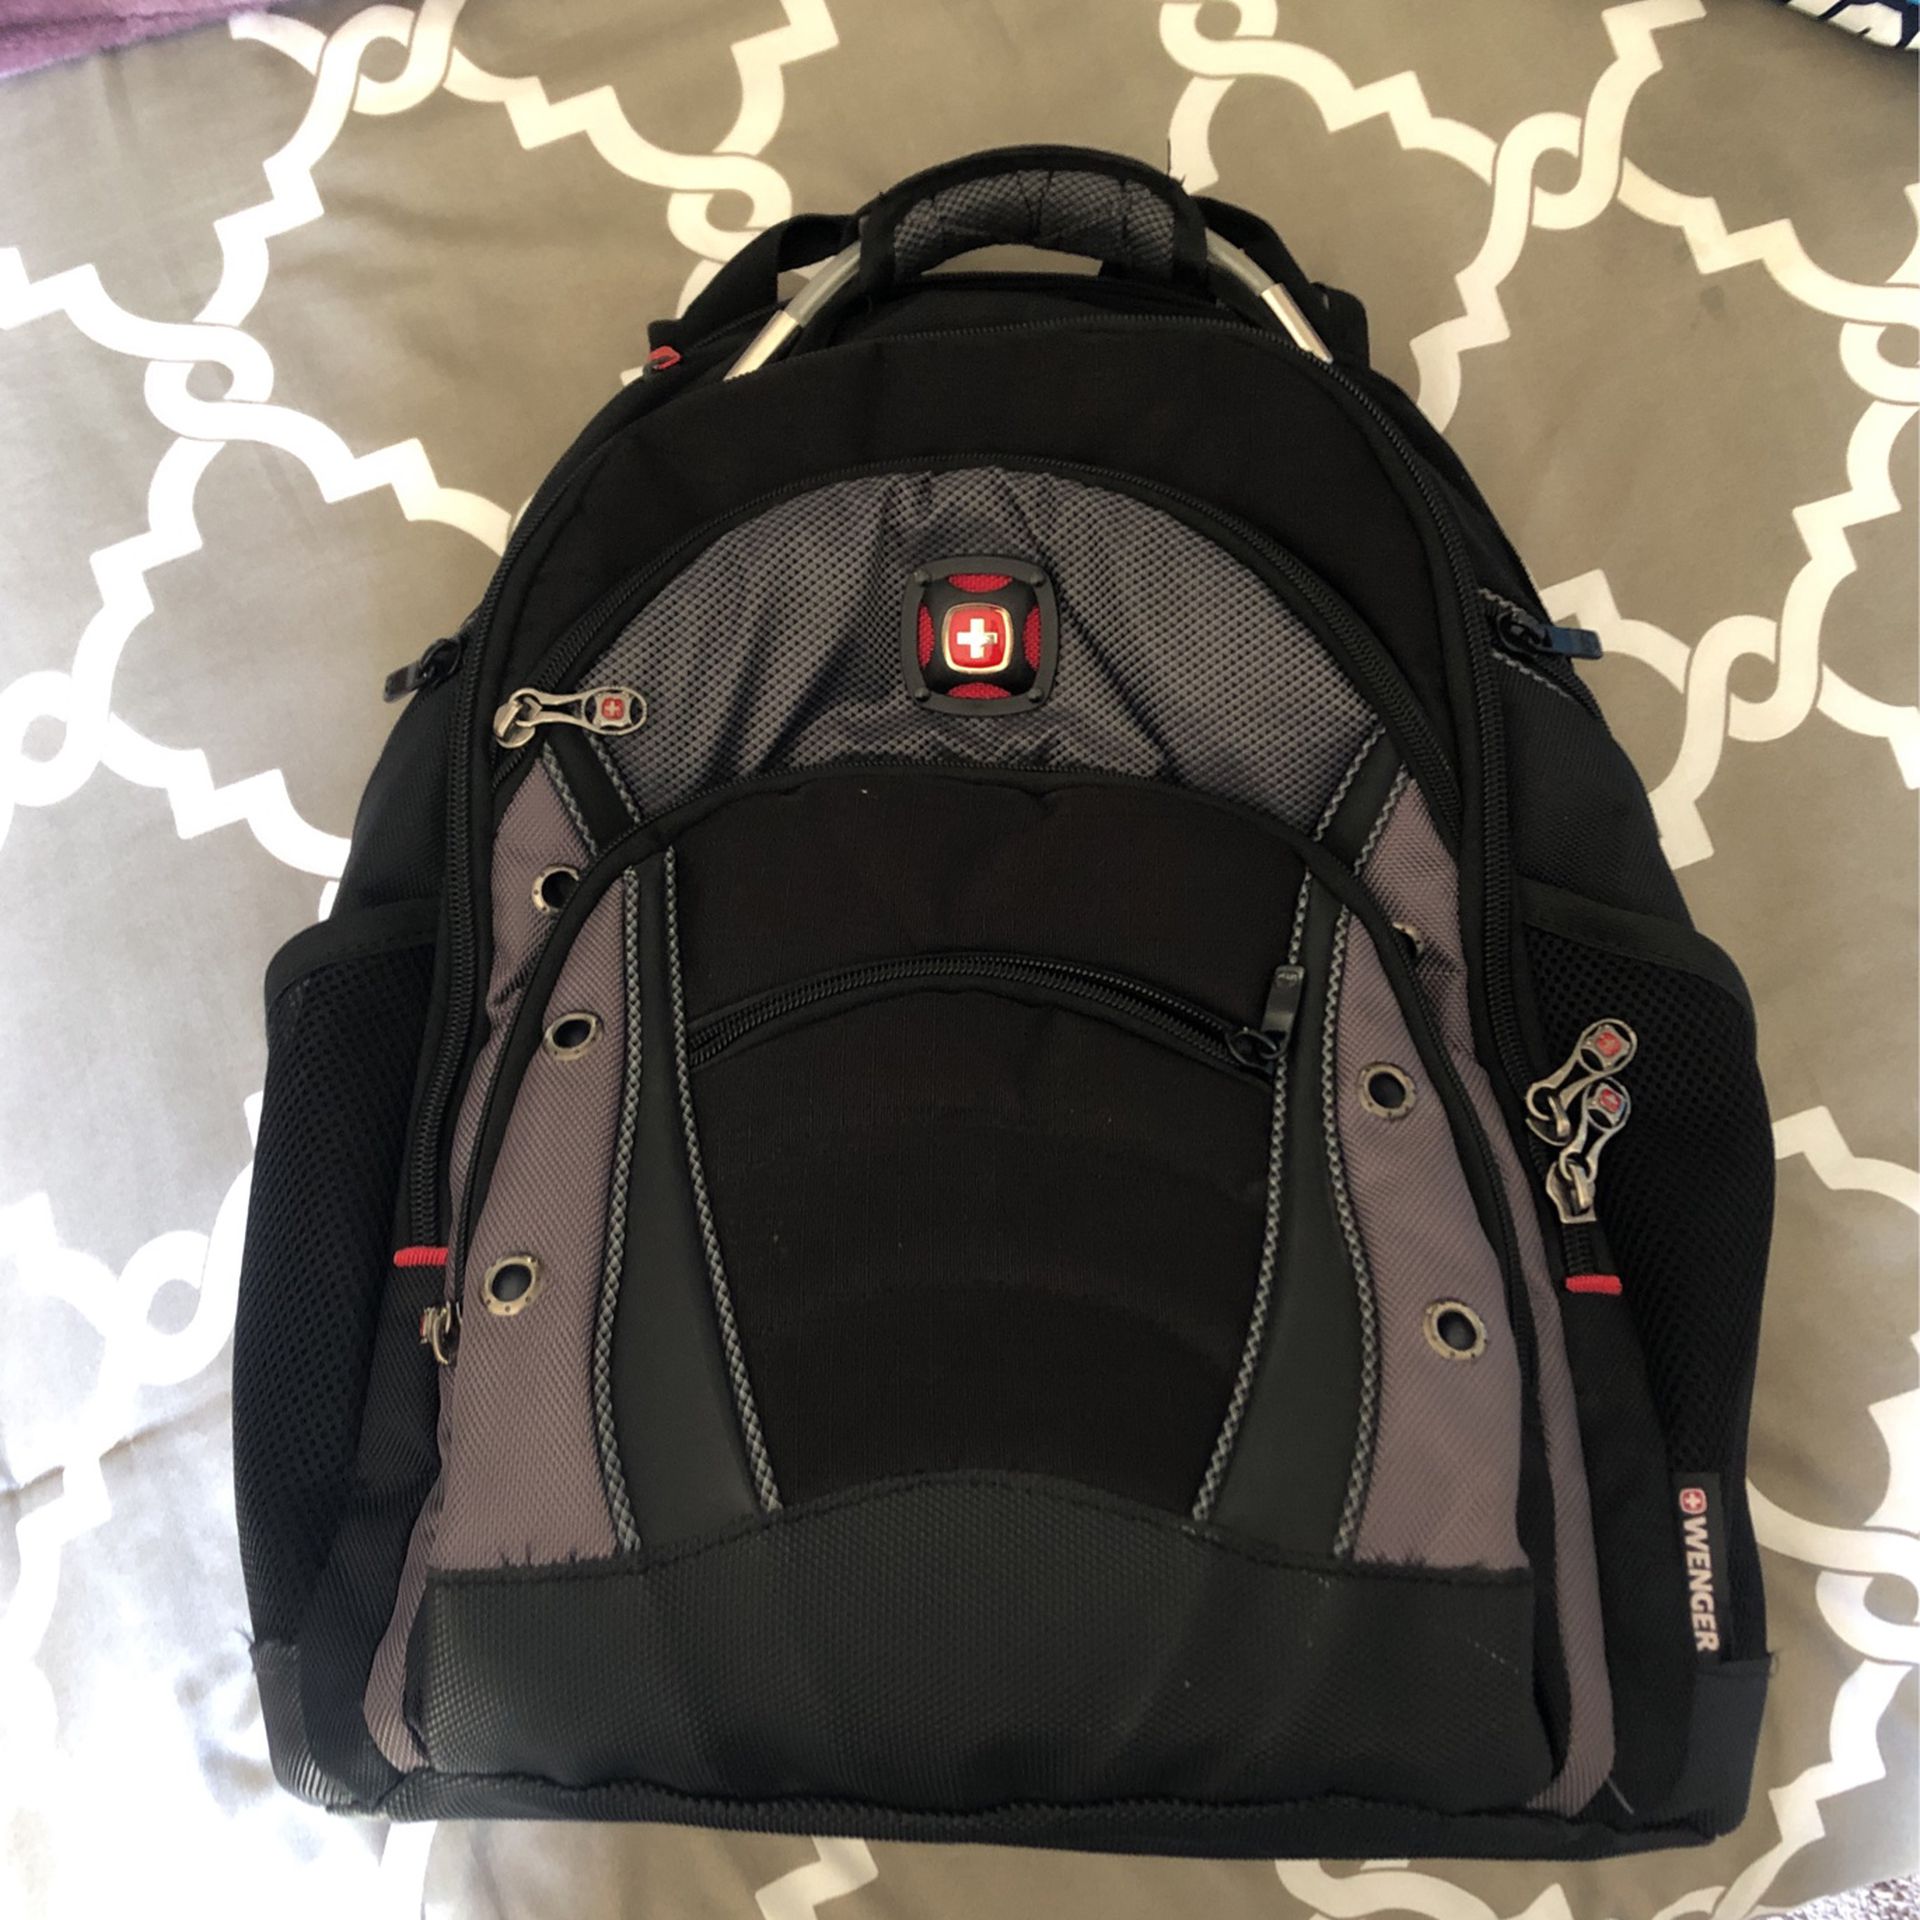 Wenger Ibex Laptop Backpack - Black/Gray